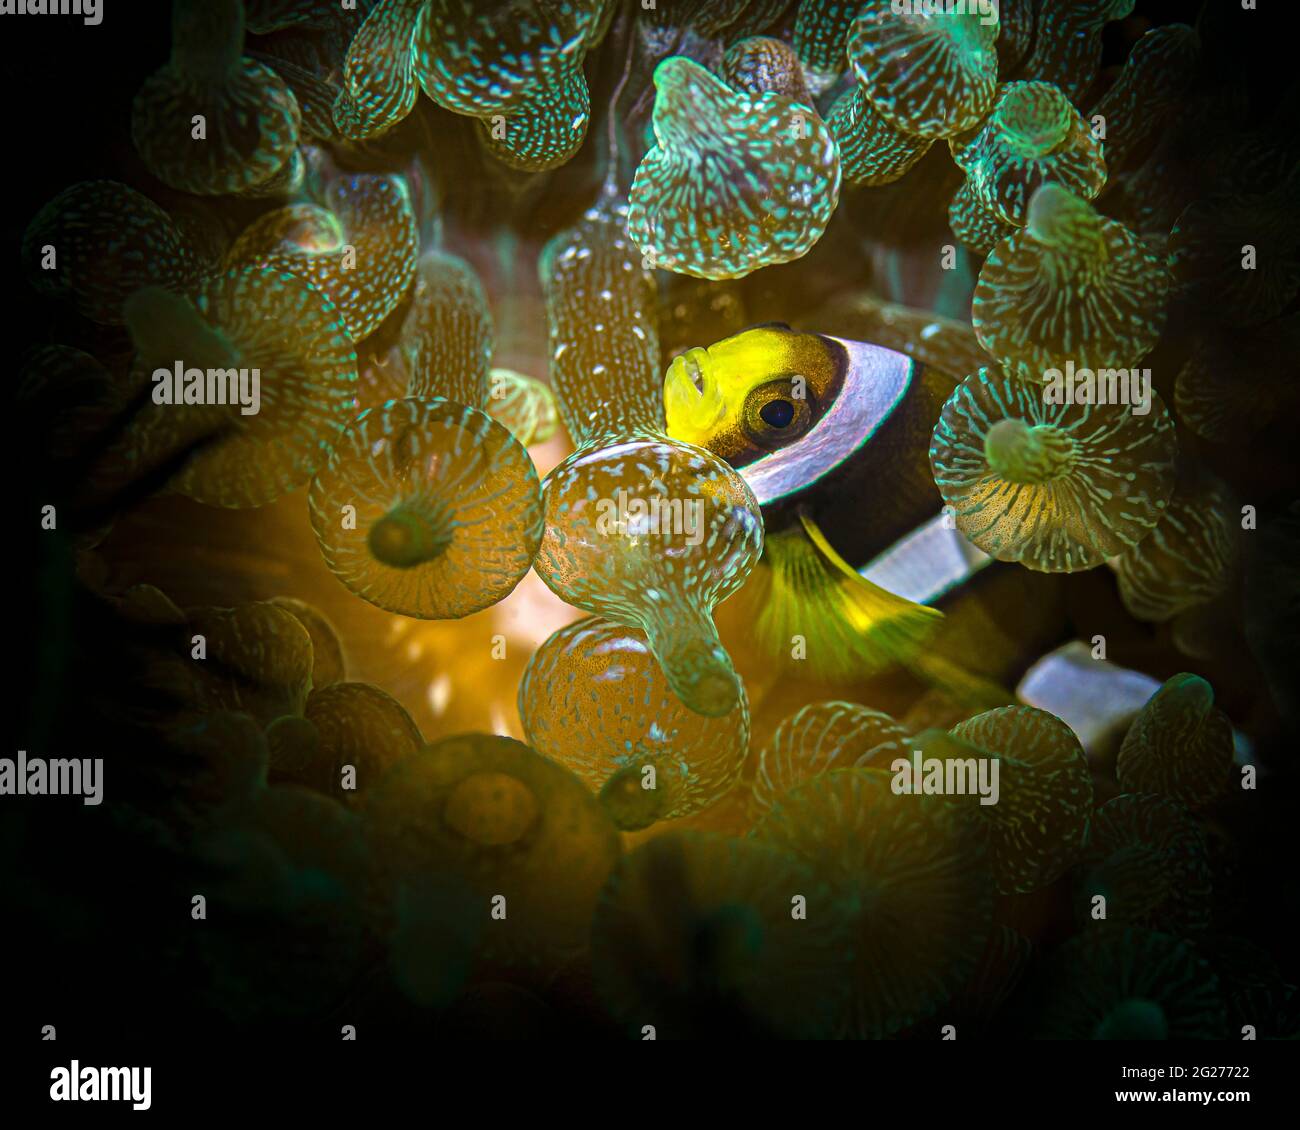 Juvenile Clarks anemonefish (Amphiprion clarkii), Anilao, Philippines. Stock Photo